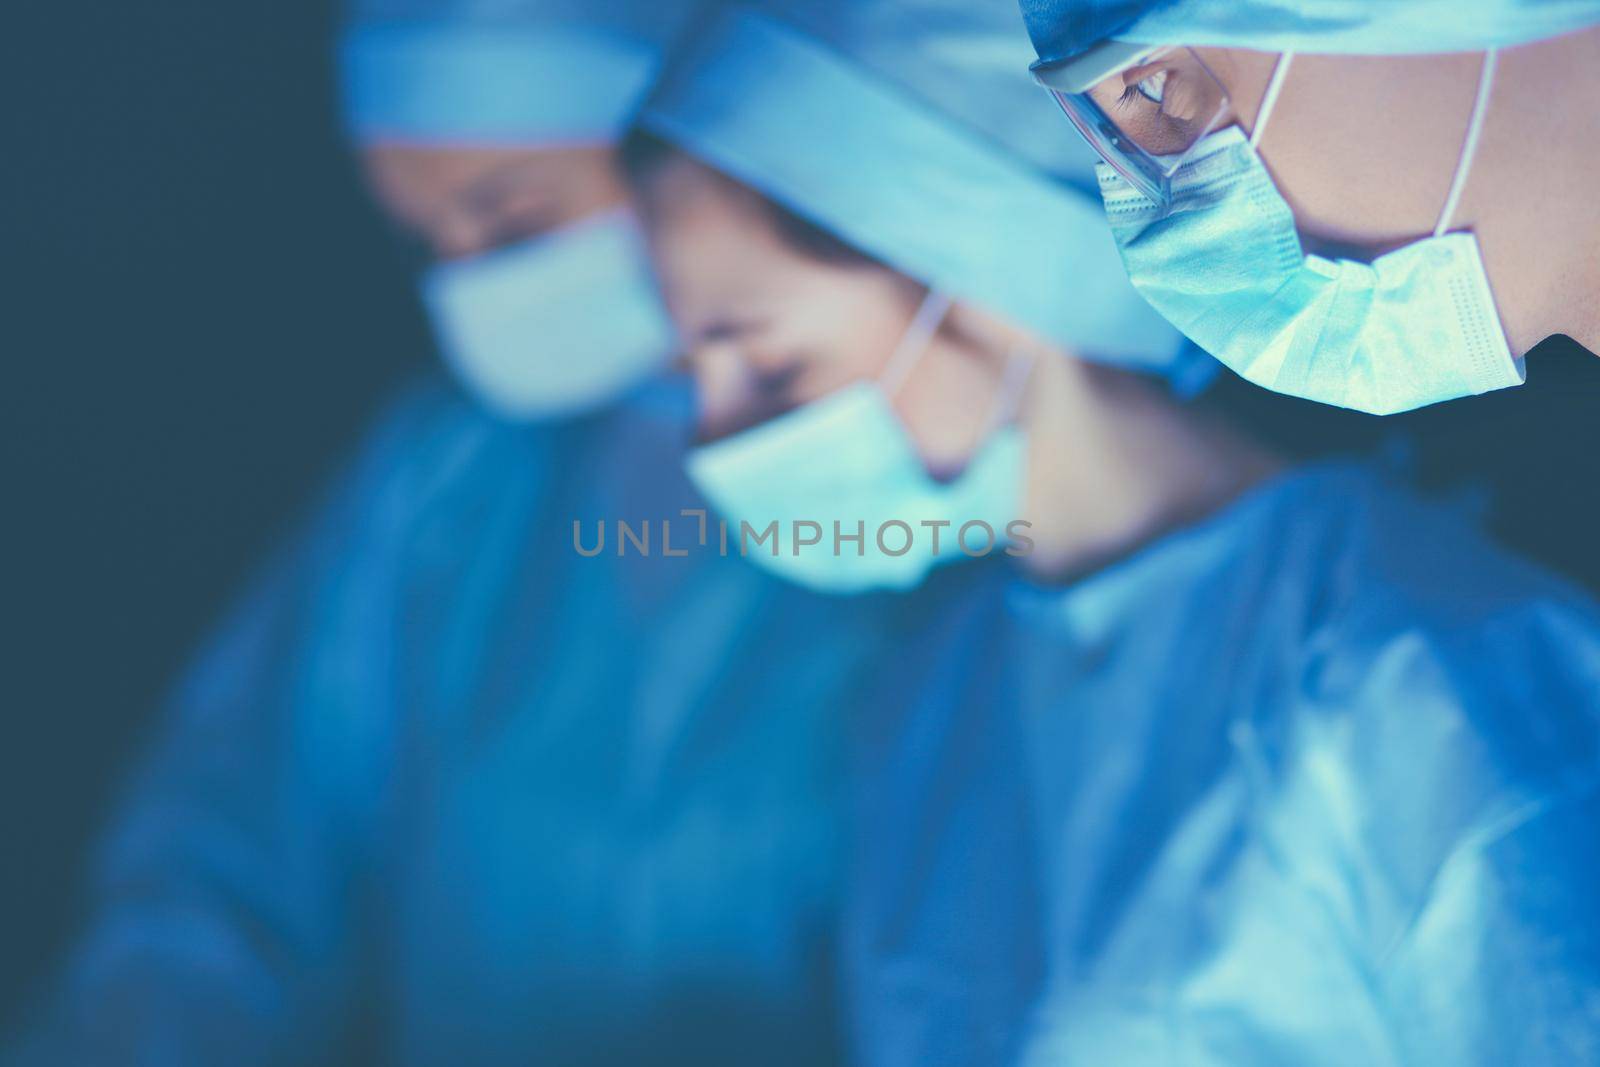 Team surgeon at work in operating room by lenetstan